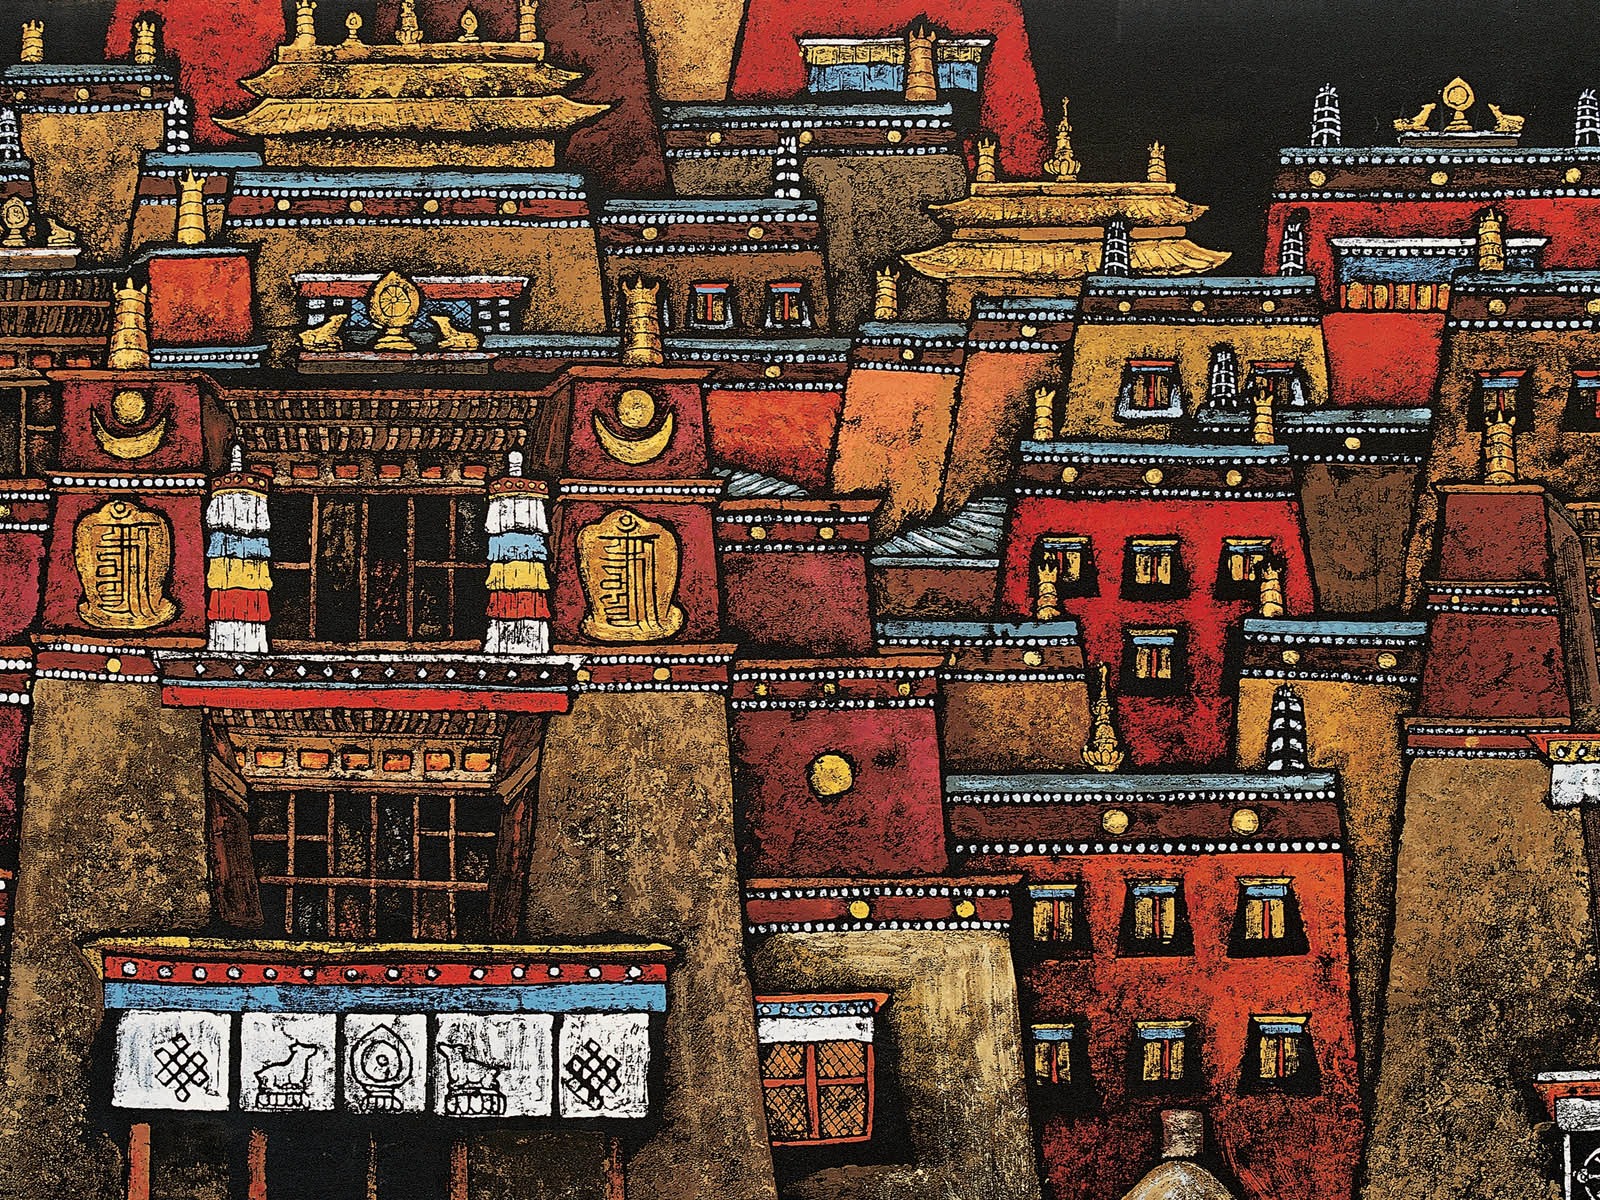 Cheung Pakistan fond d'écran d'impression du Tibet (1) #18 - 1600x1200